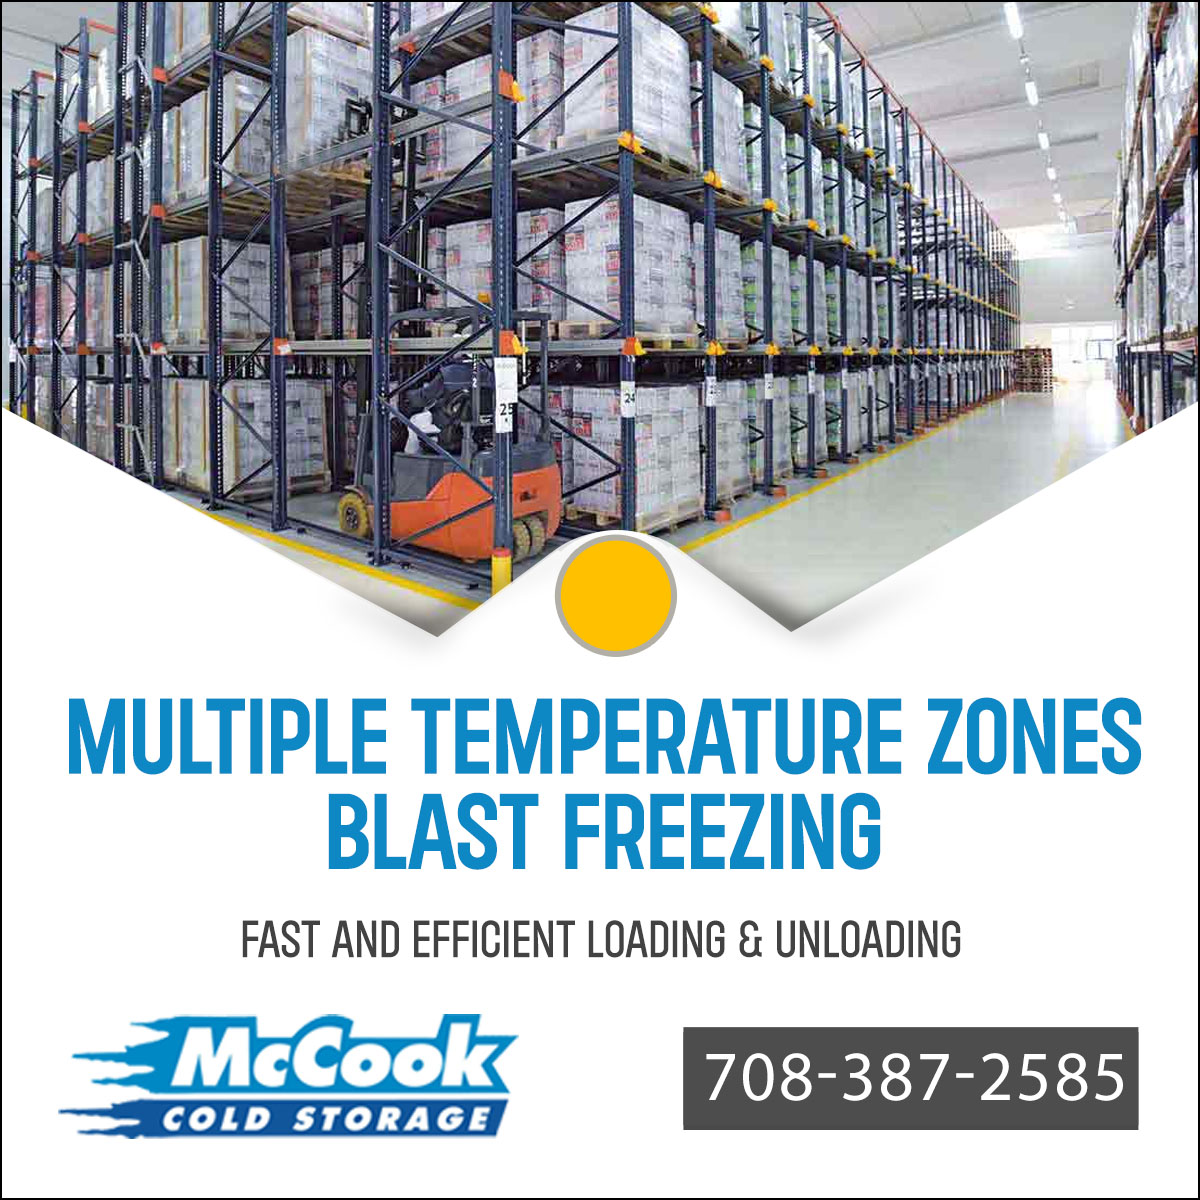 McCook Cold Storage, Inc